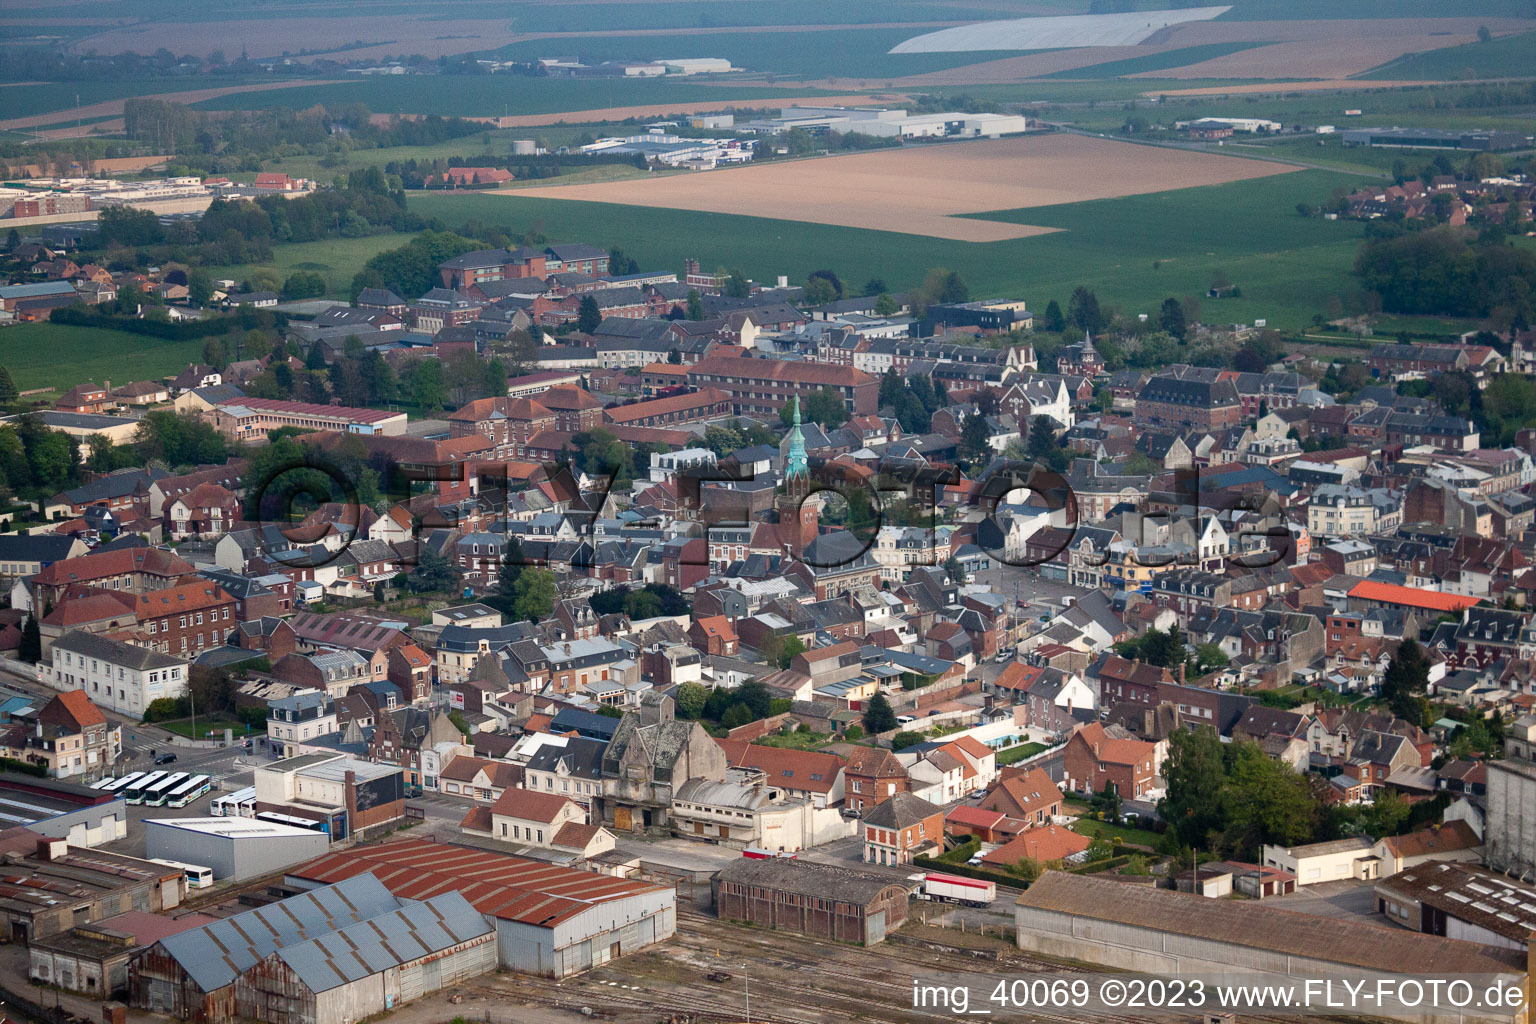 Luftaufnahme von Avesnes-lès-Bapaume im Bundesland Pas-de-Calais, Frankreich